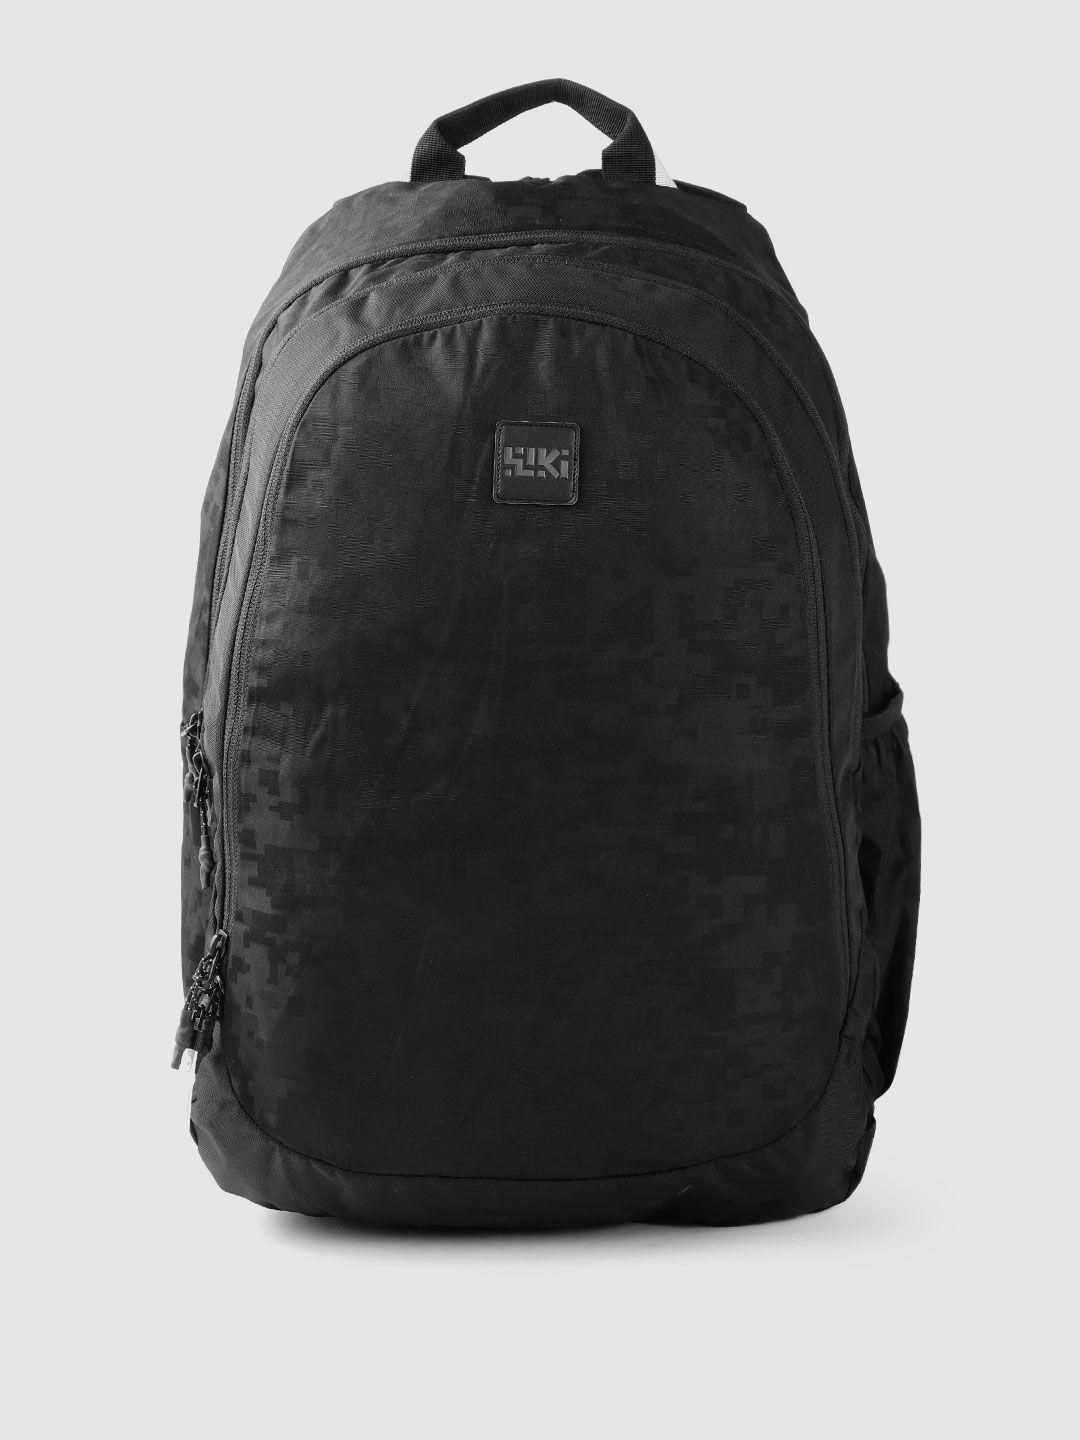 wildcraft unisex backpack - 34 l